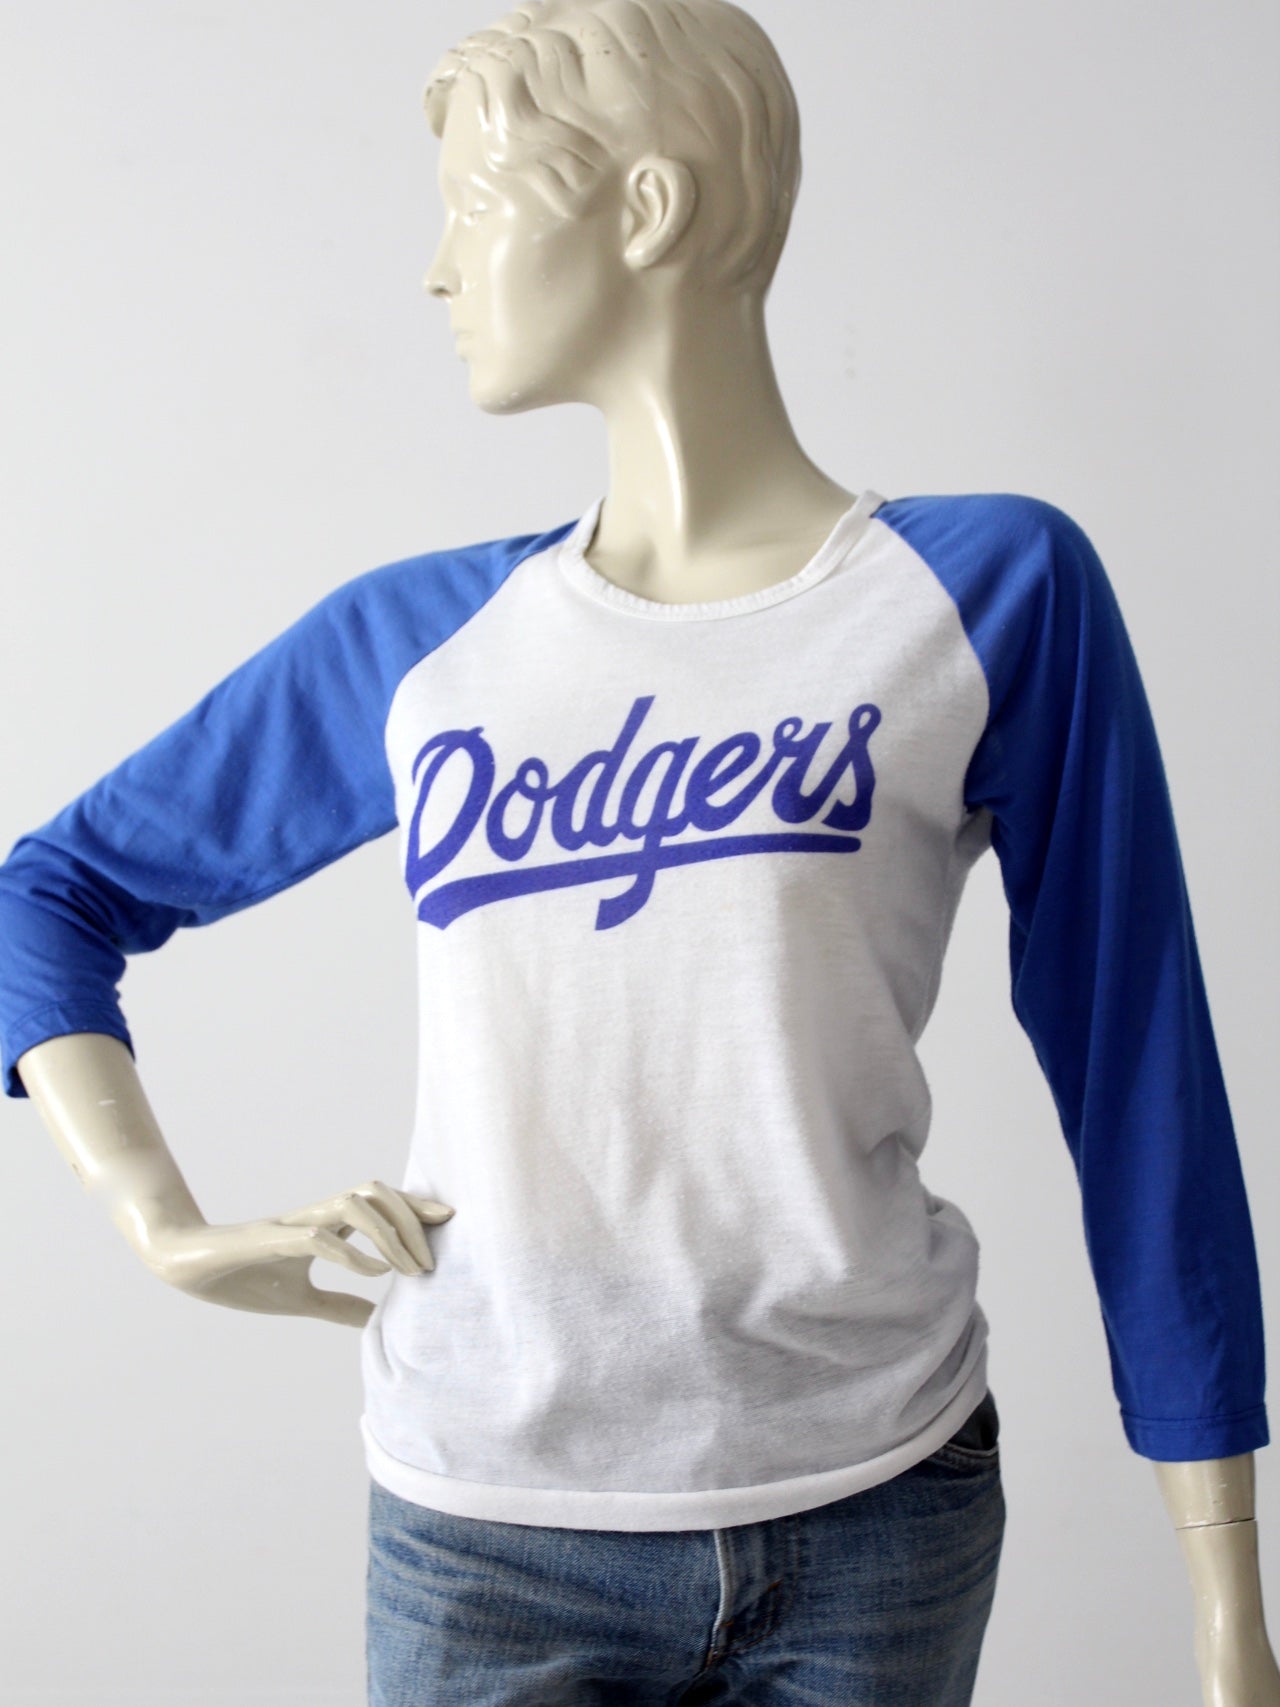 Vintage 80s Mens La Dodgers Baseball Shirt M Gray Valenzuela Raglan by